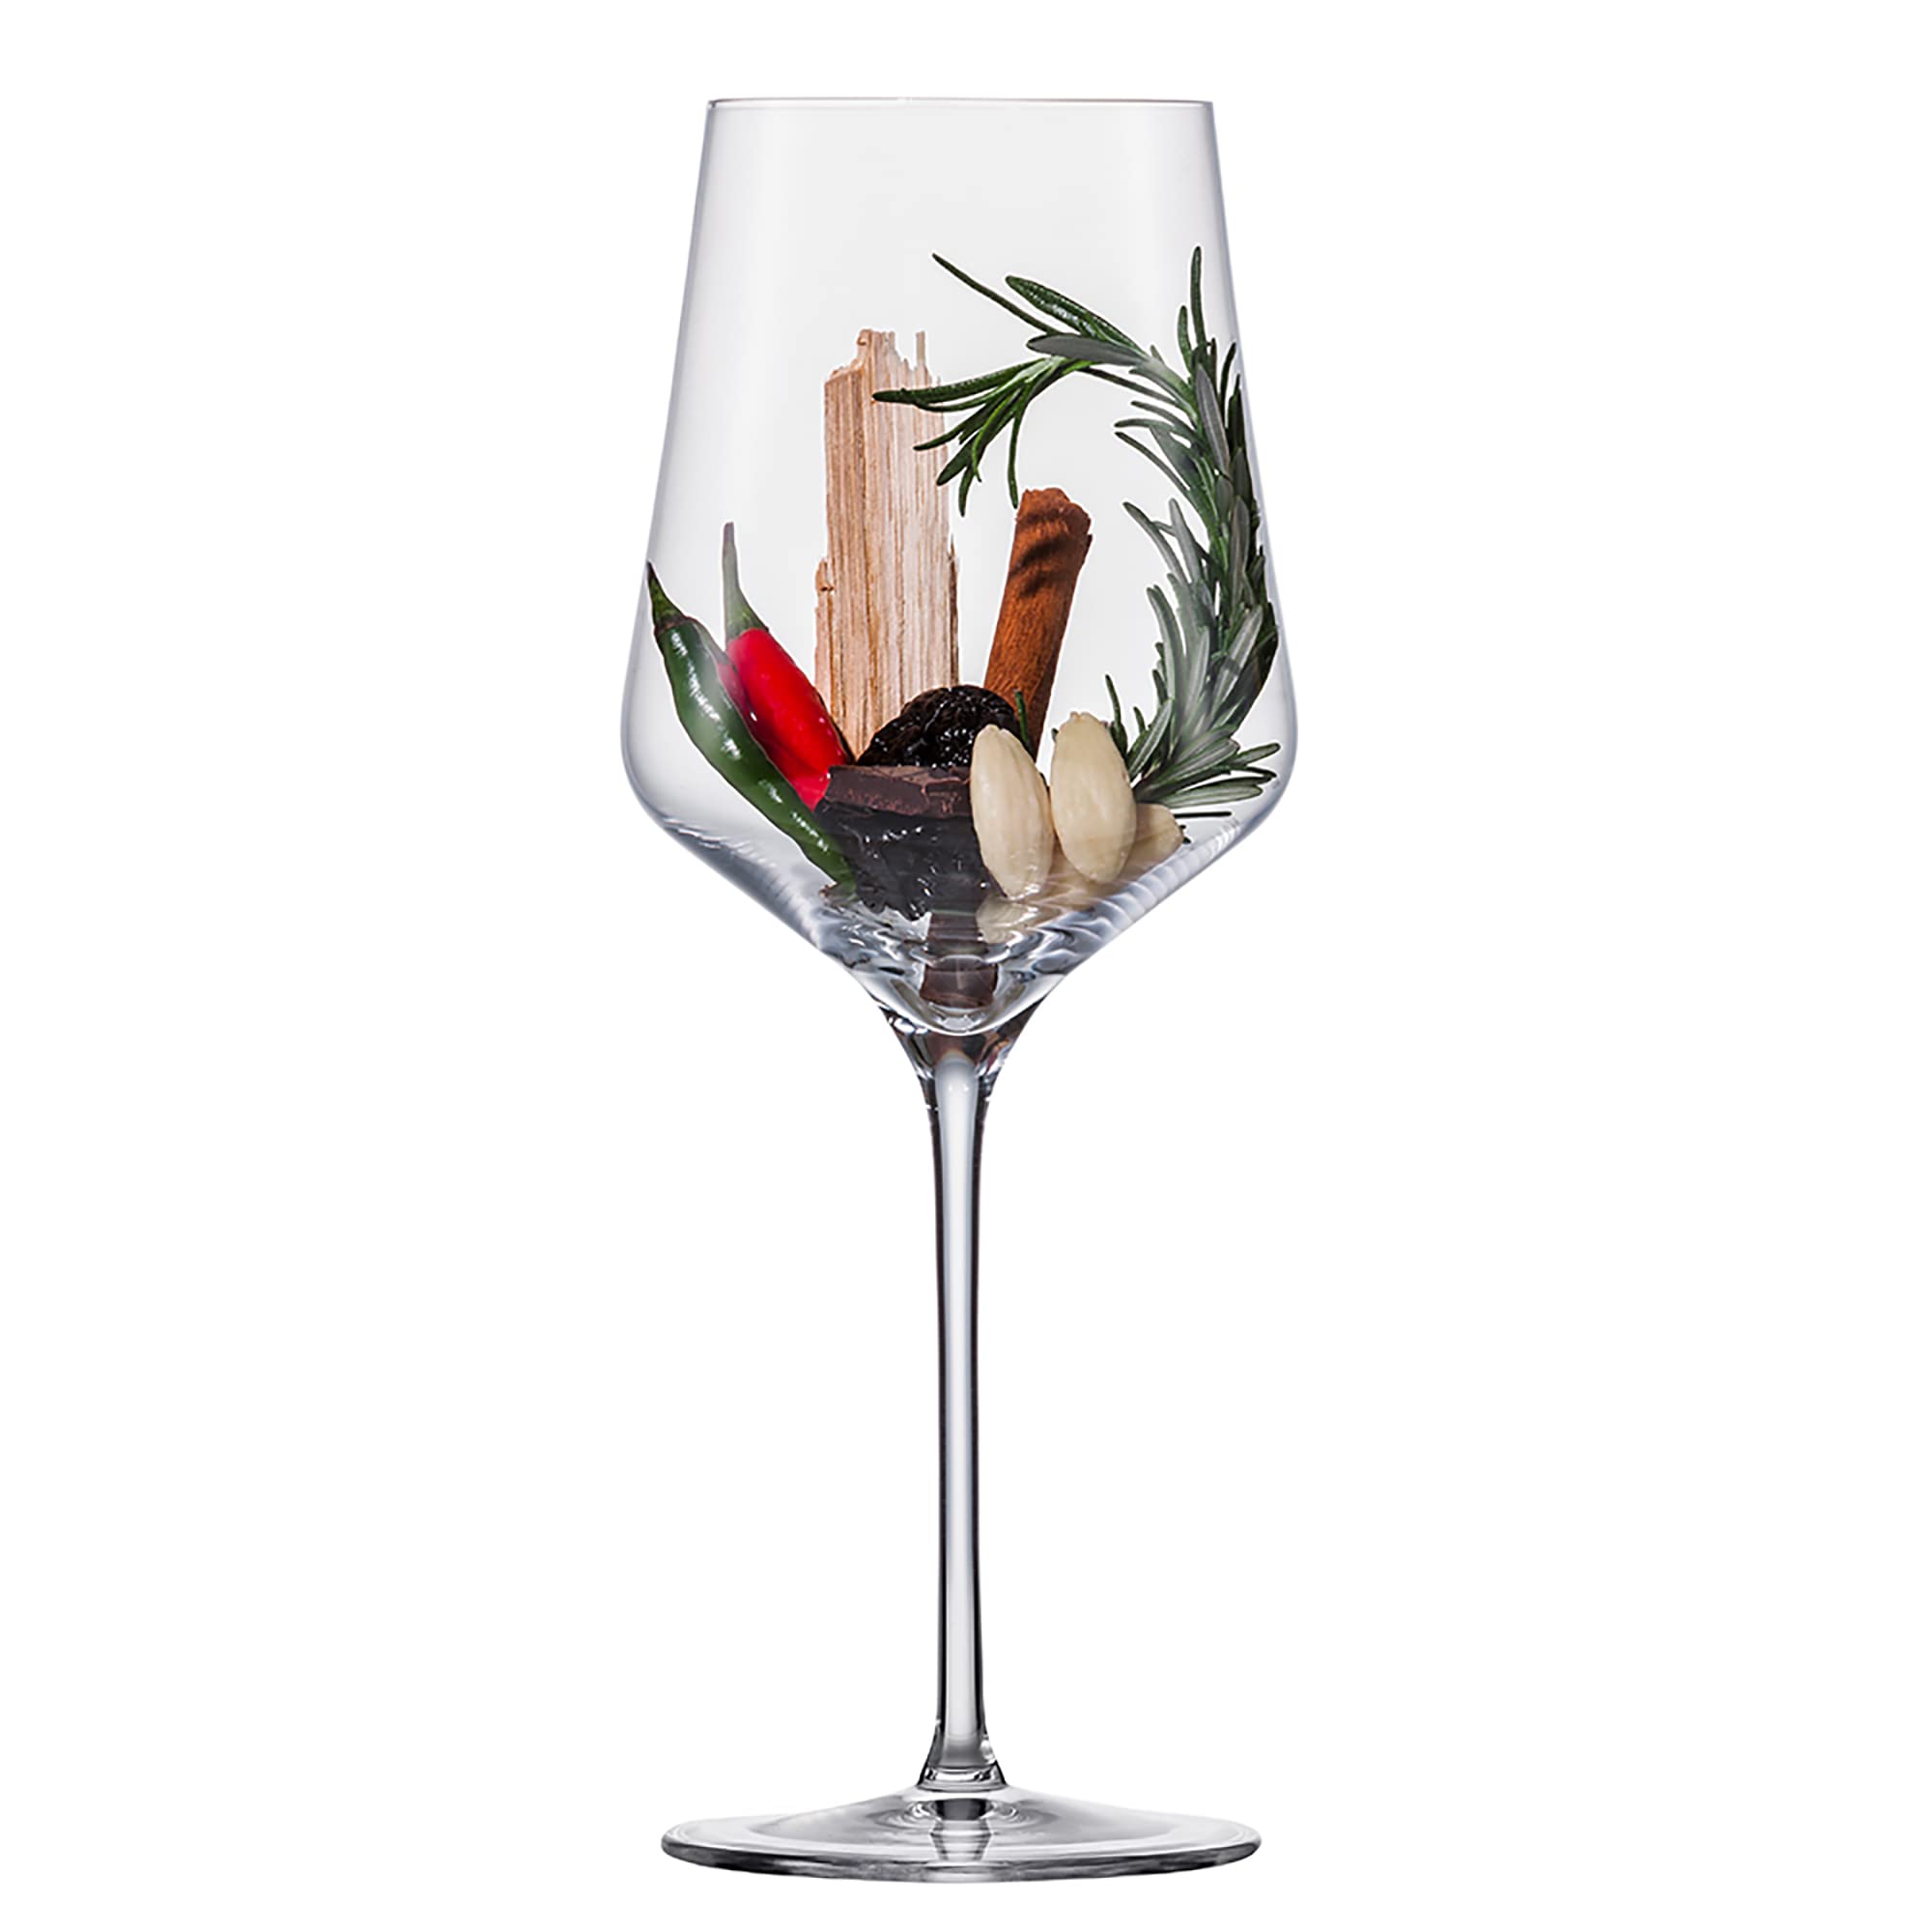 Eisch Sky Bordeaux Sensis Plus Lead-Free Crystal Wine Glass, Set of 2, 21.9-Ounce